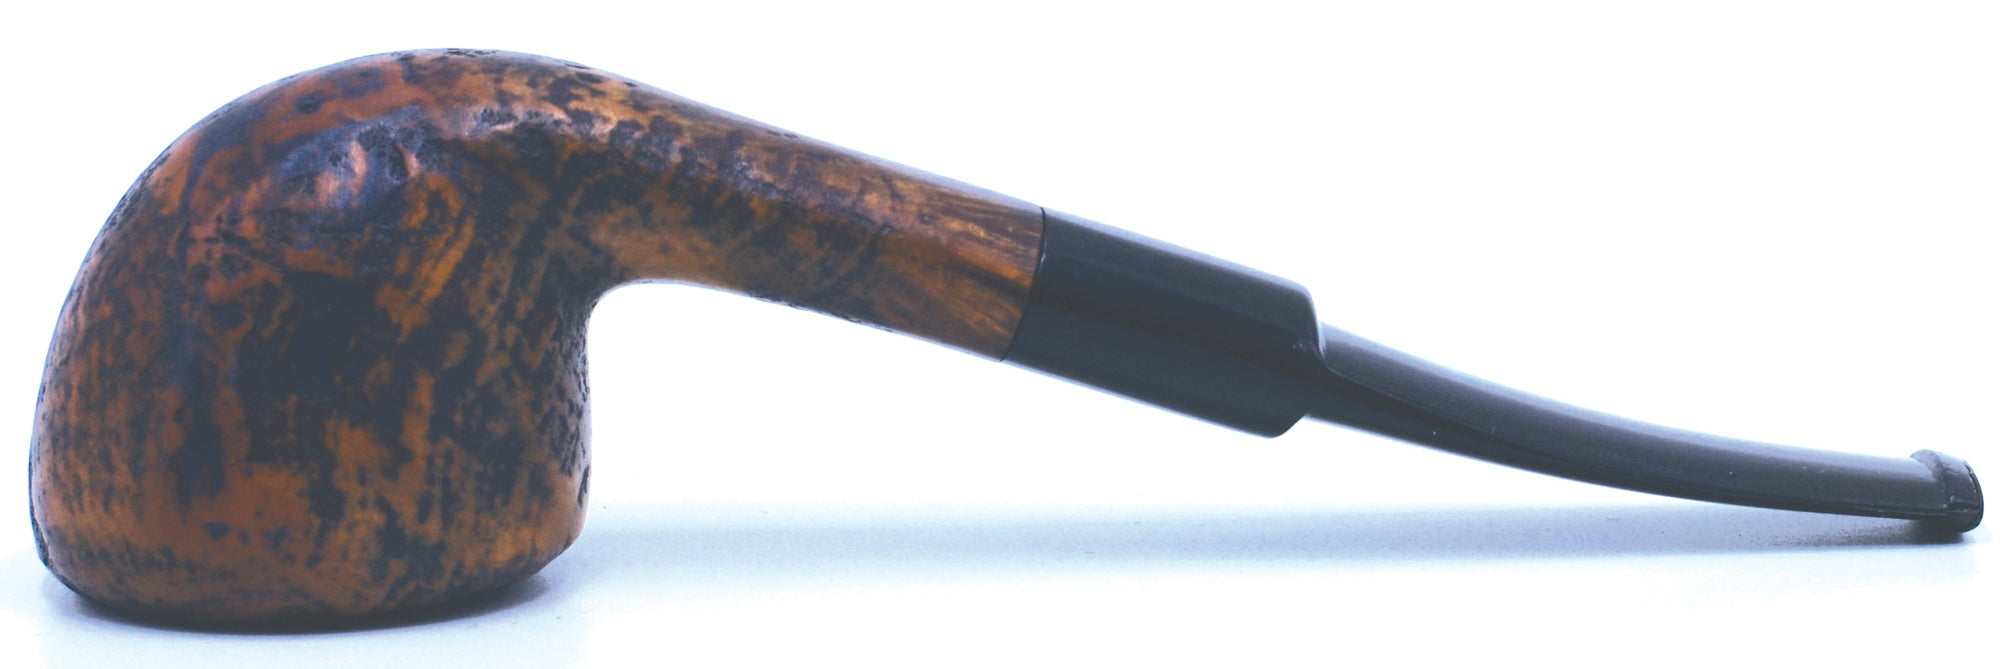 LEGENDEX® VERDI* Non-Filtered Briar Smoking Pipe Made In Italy 01-08-922